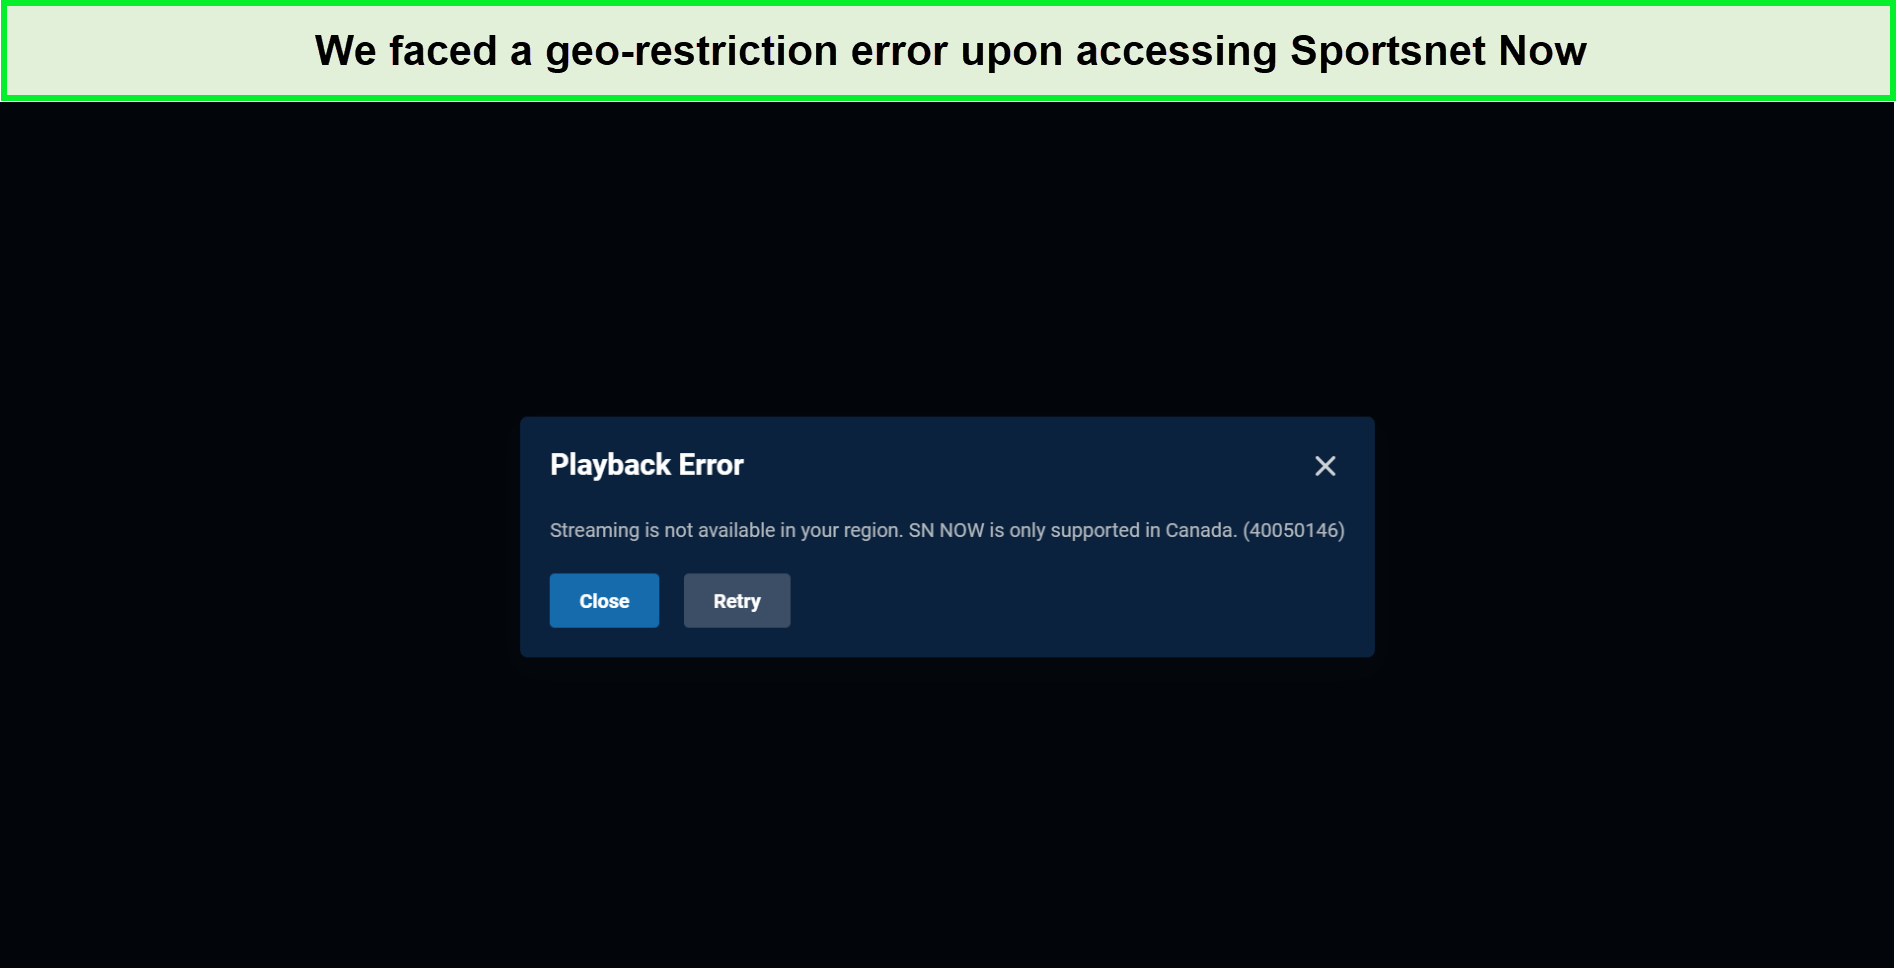 sportsnet-now-in-Italy-geo-restriction-error